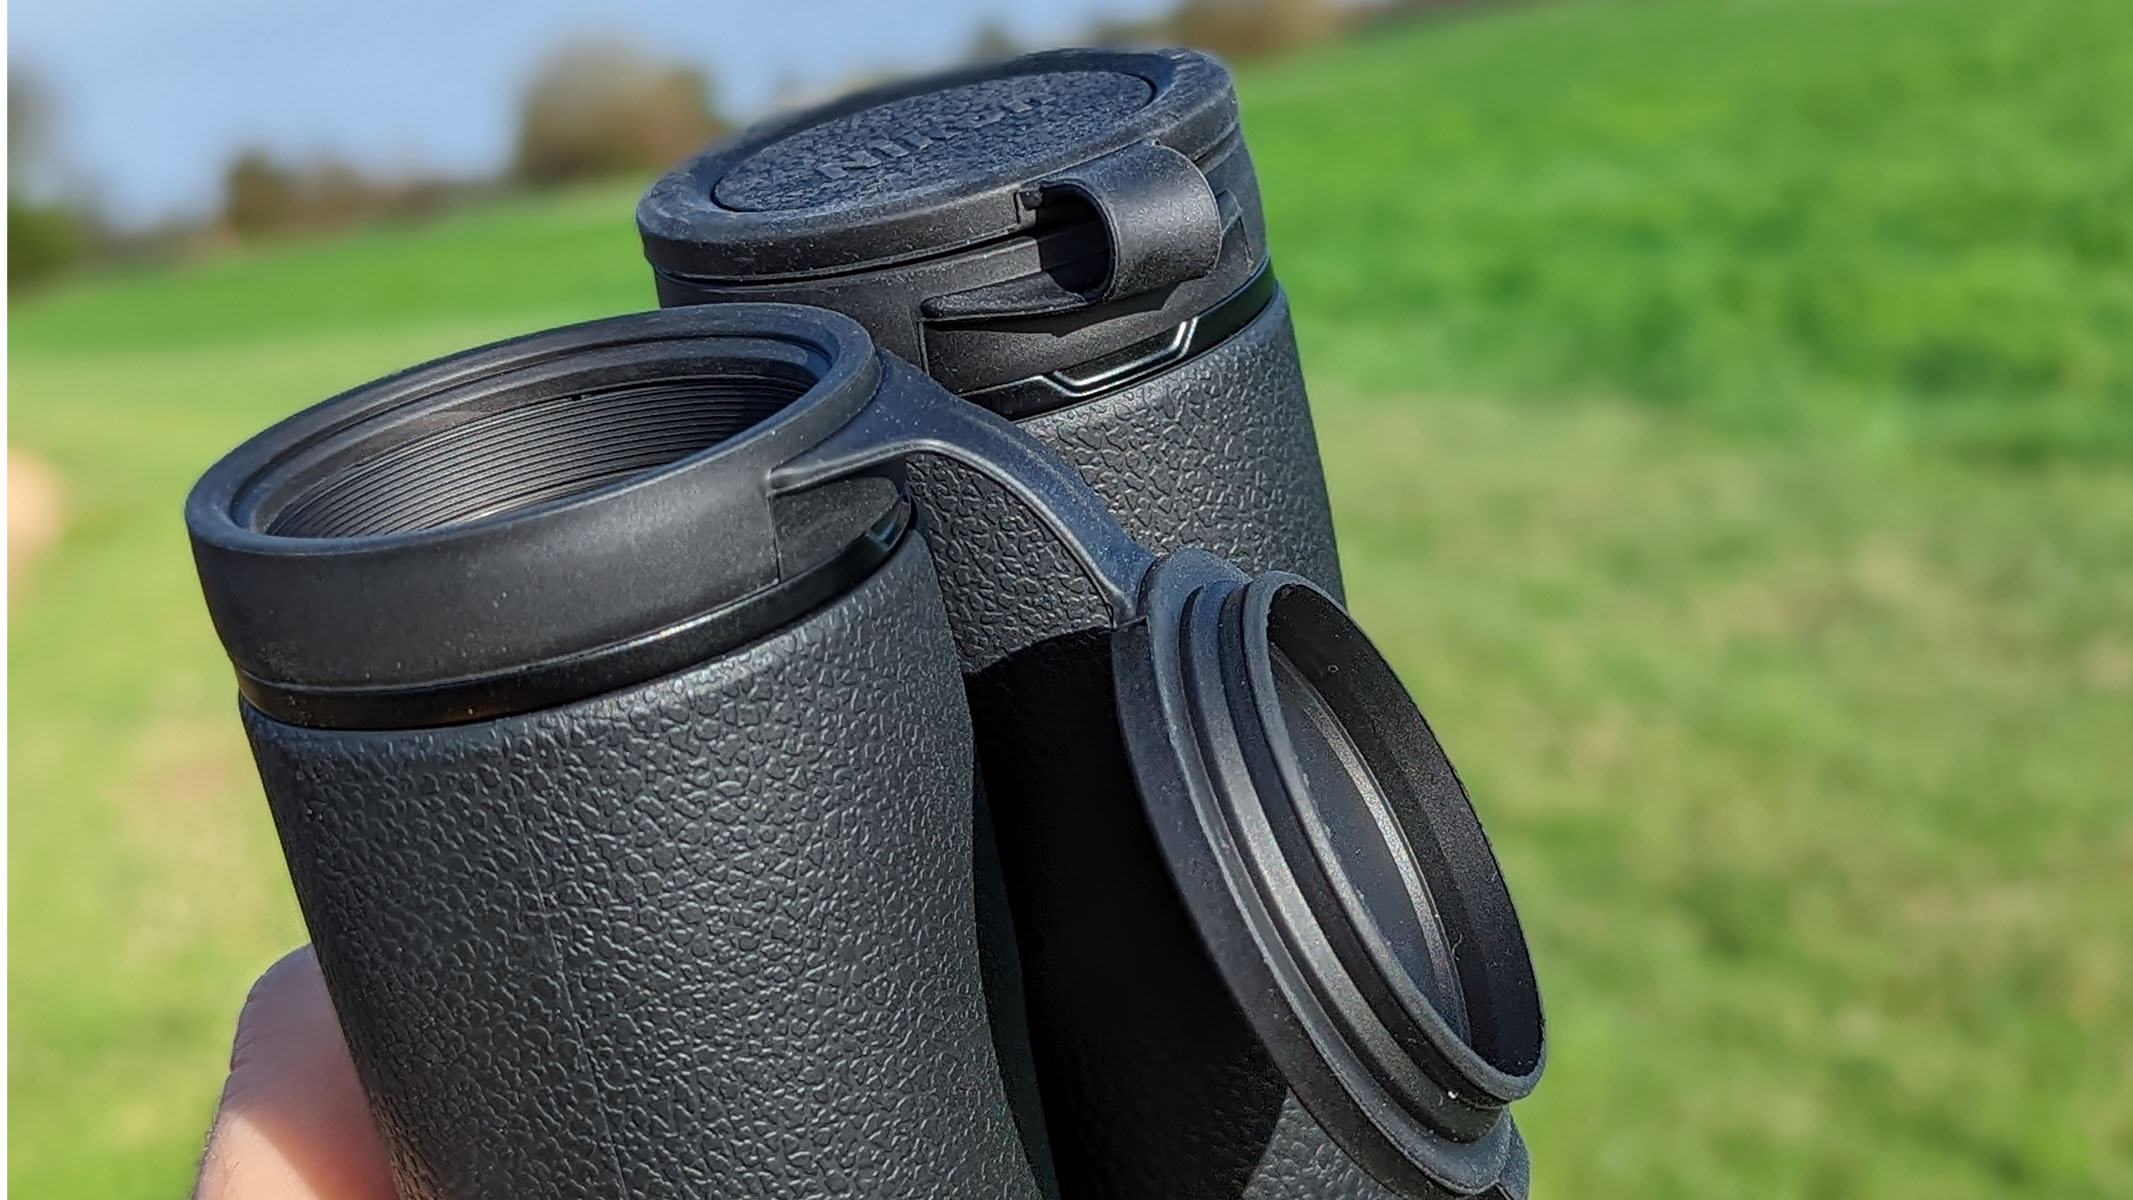 The Nikon Monarch HG 10x42 binocular eye lens covers up close